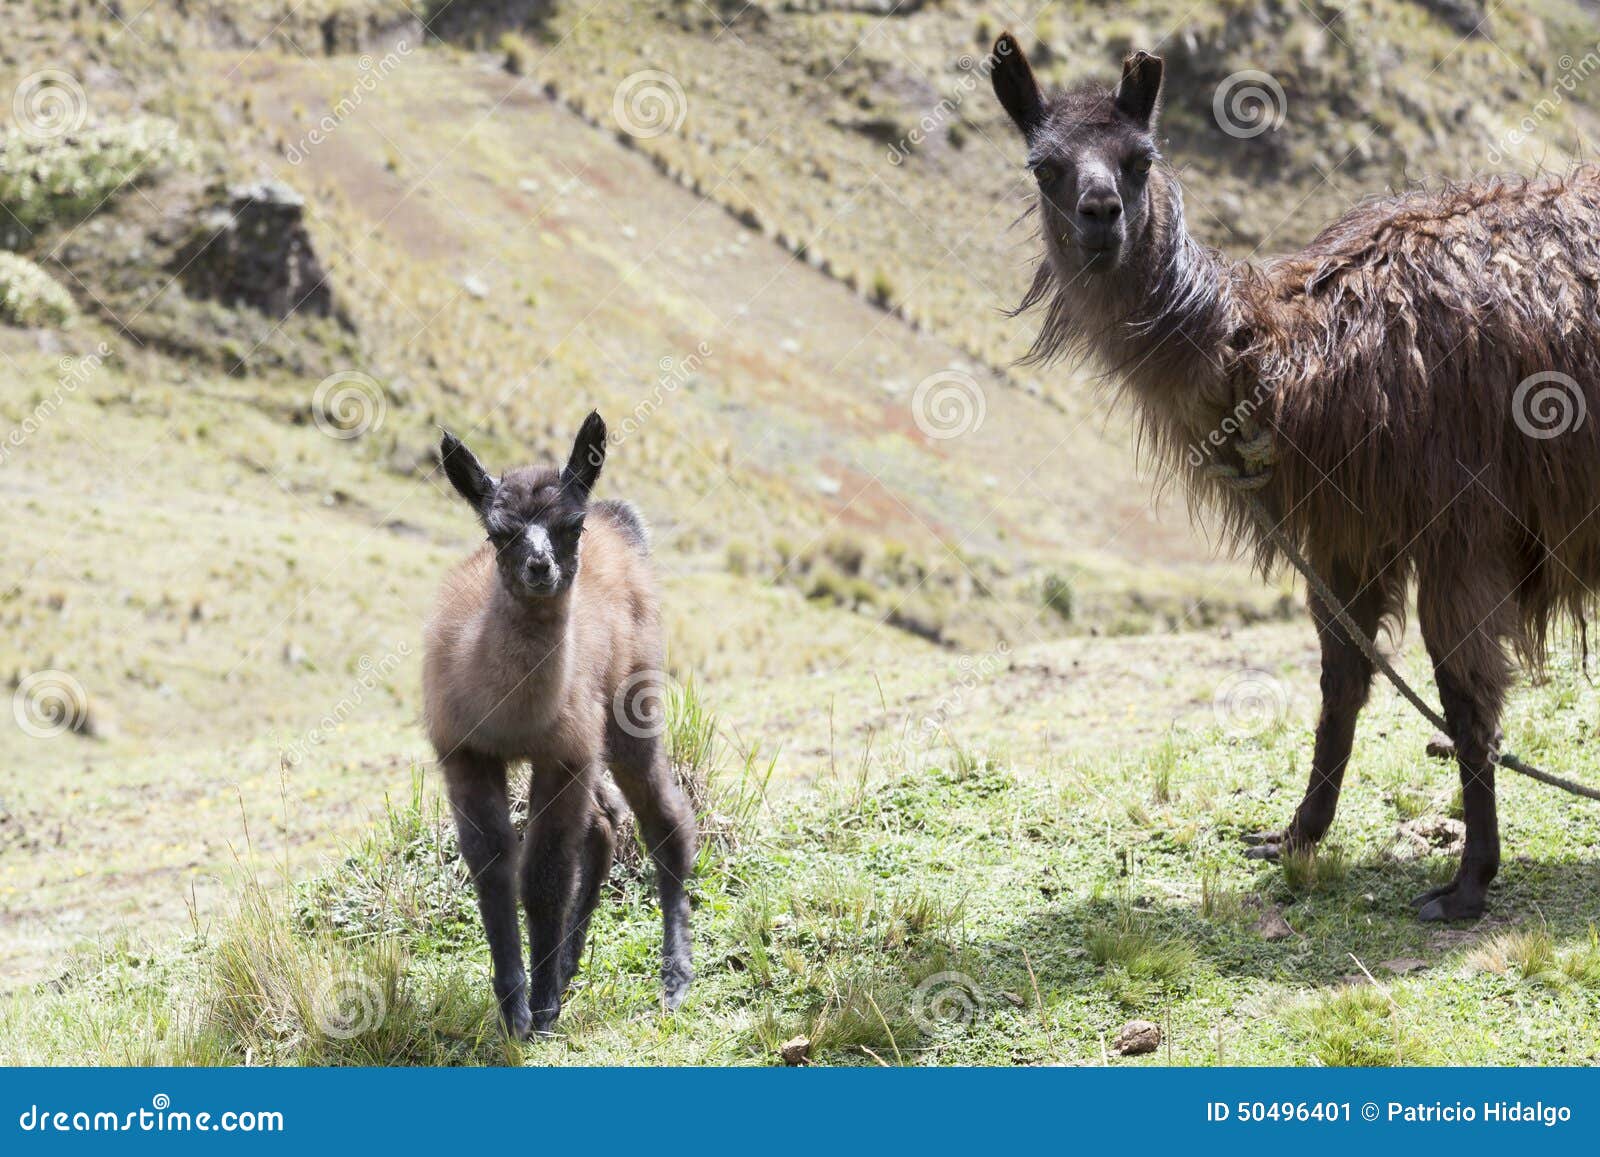 llama and her calf facing forward